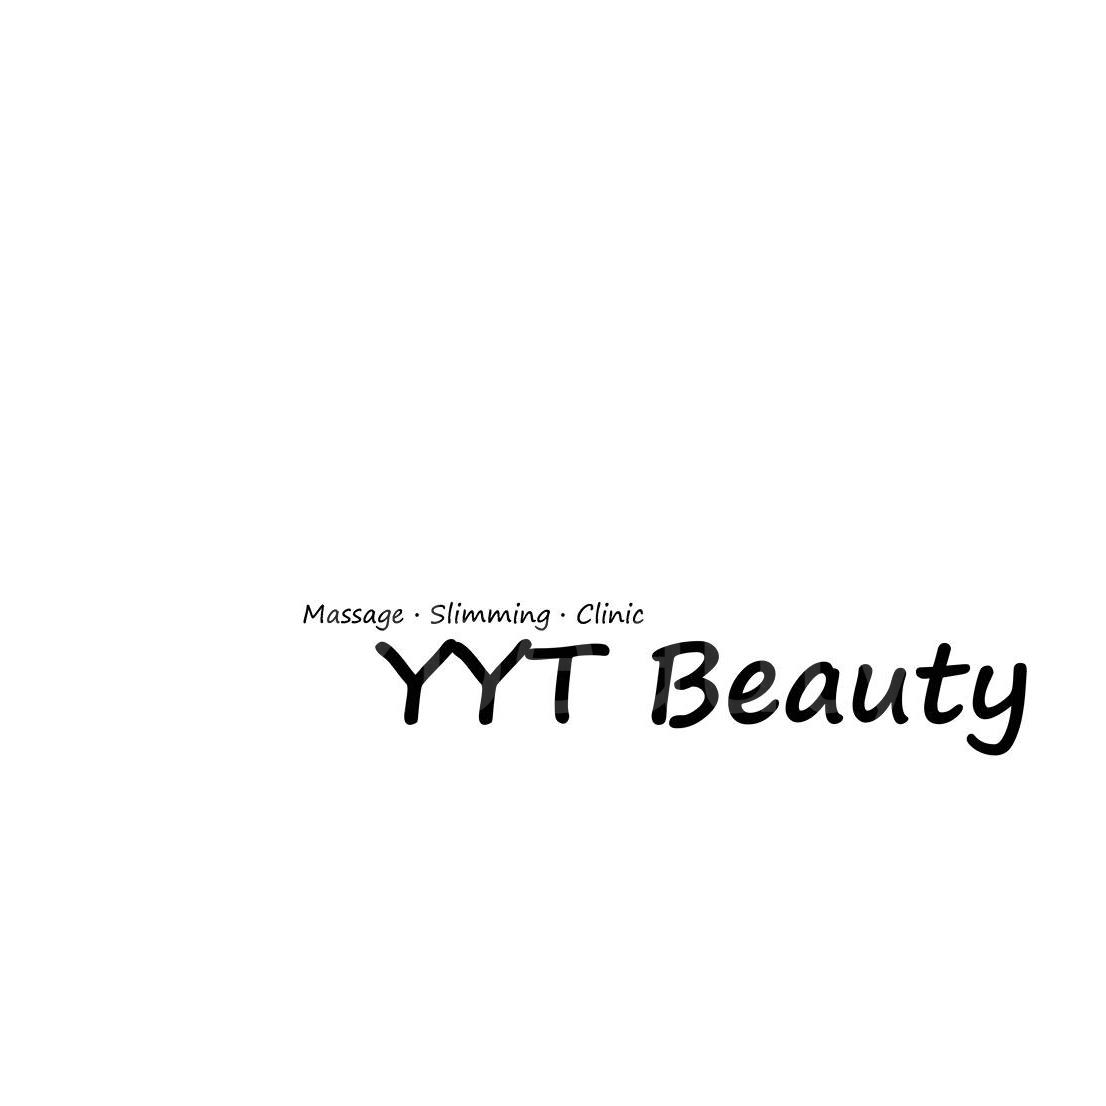 香港美容網 Hong Kong Beauty Salon 美容院 / 美容師: YYT Beauty (荃灣)